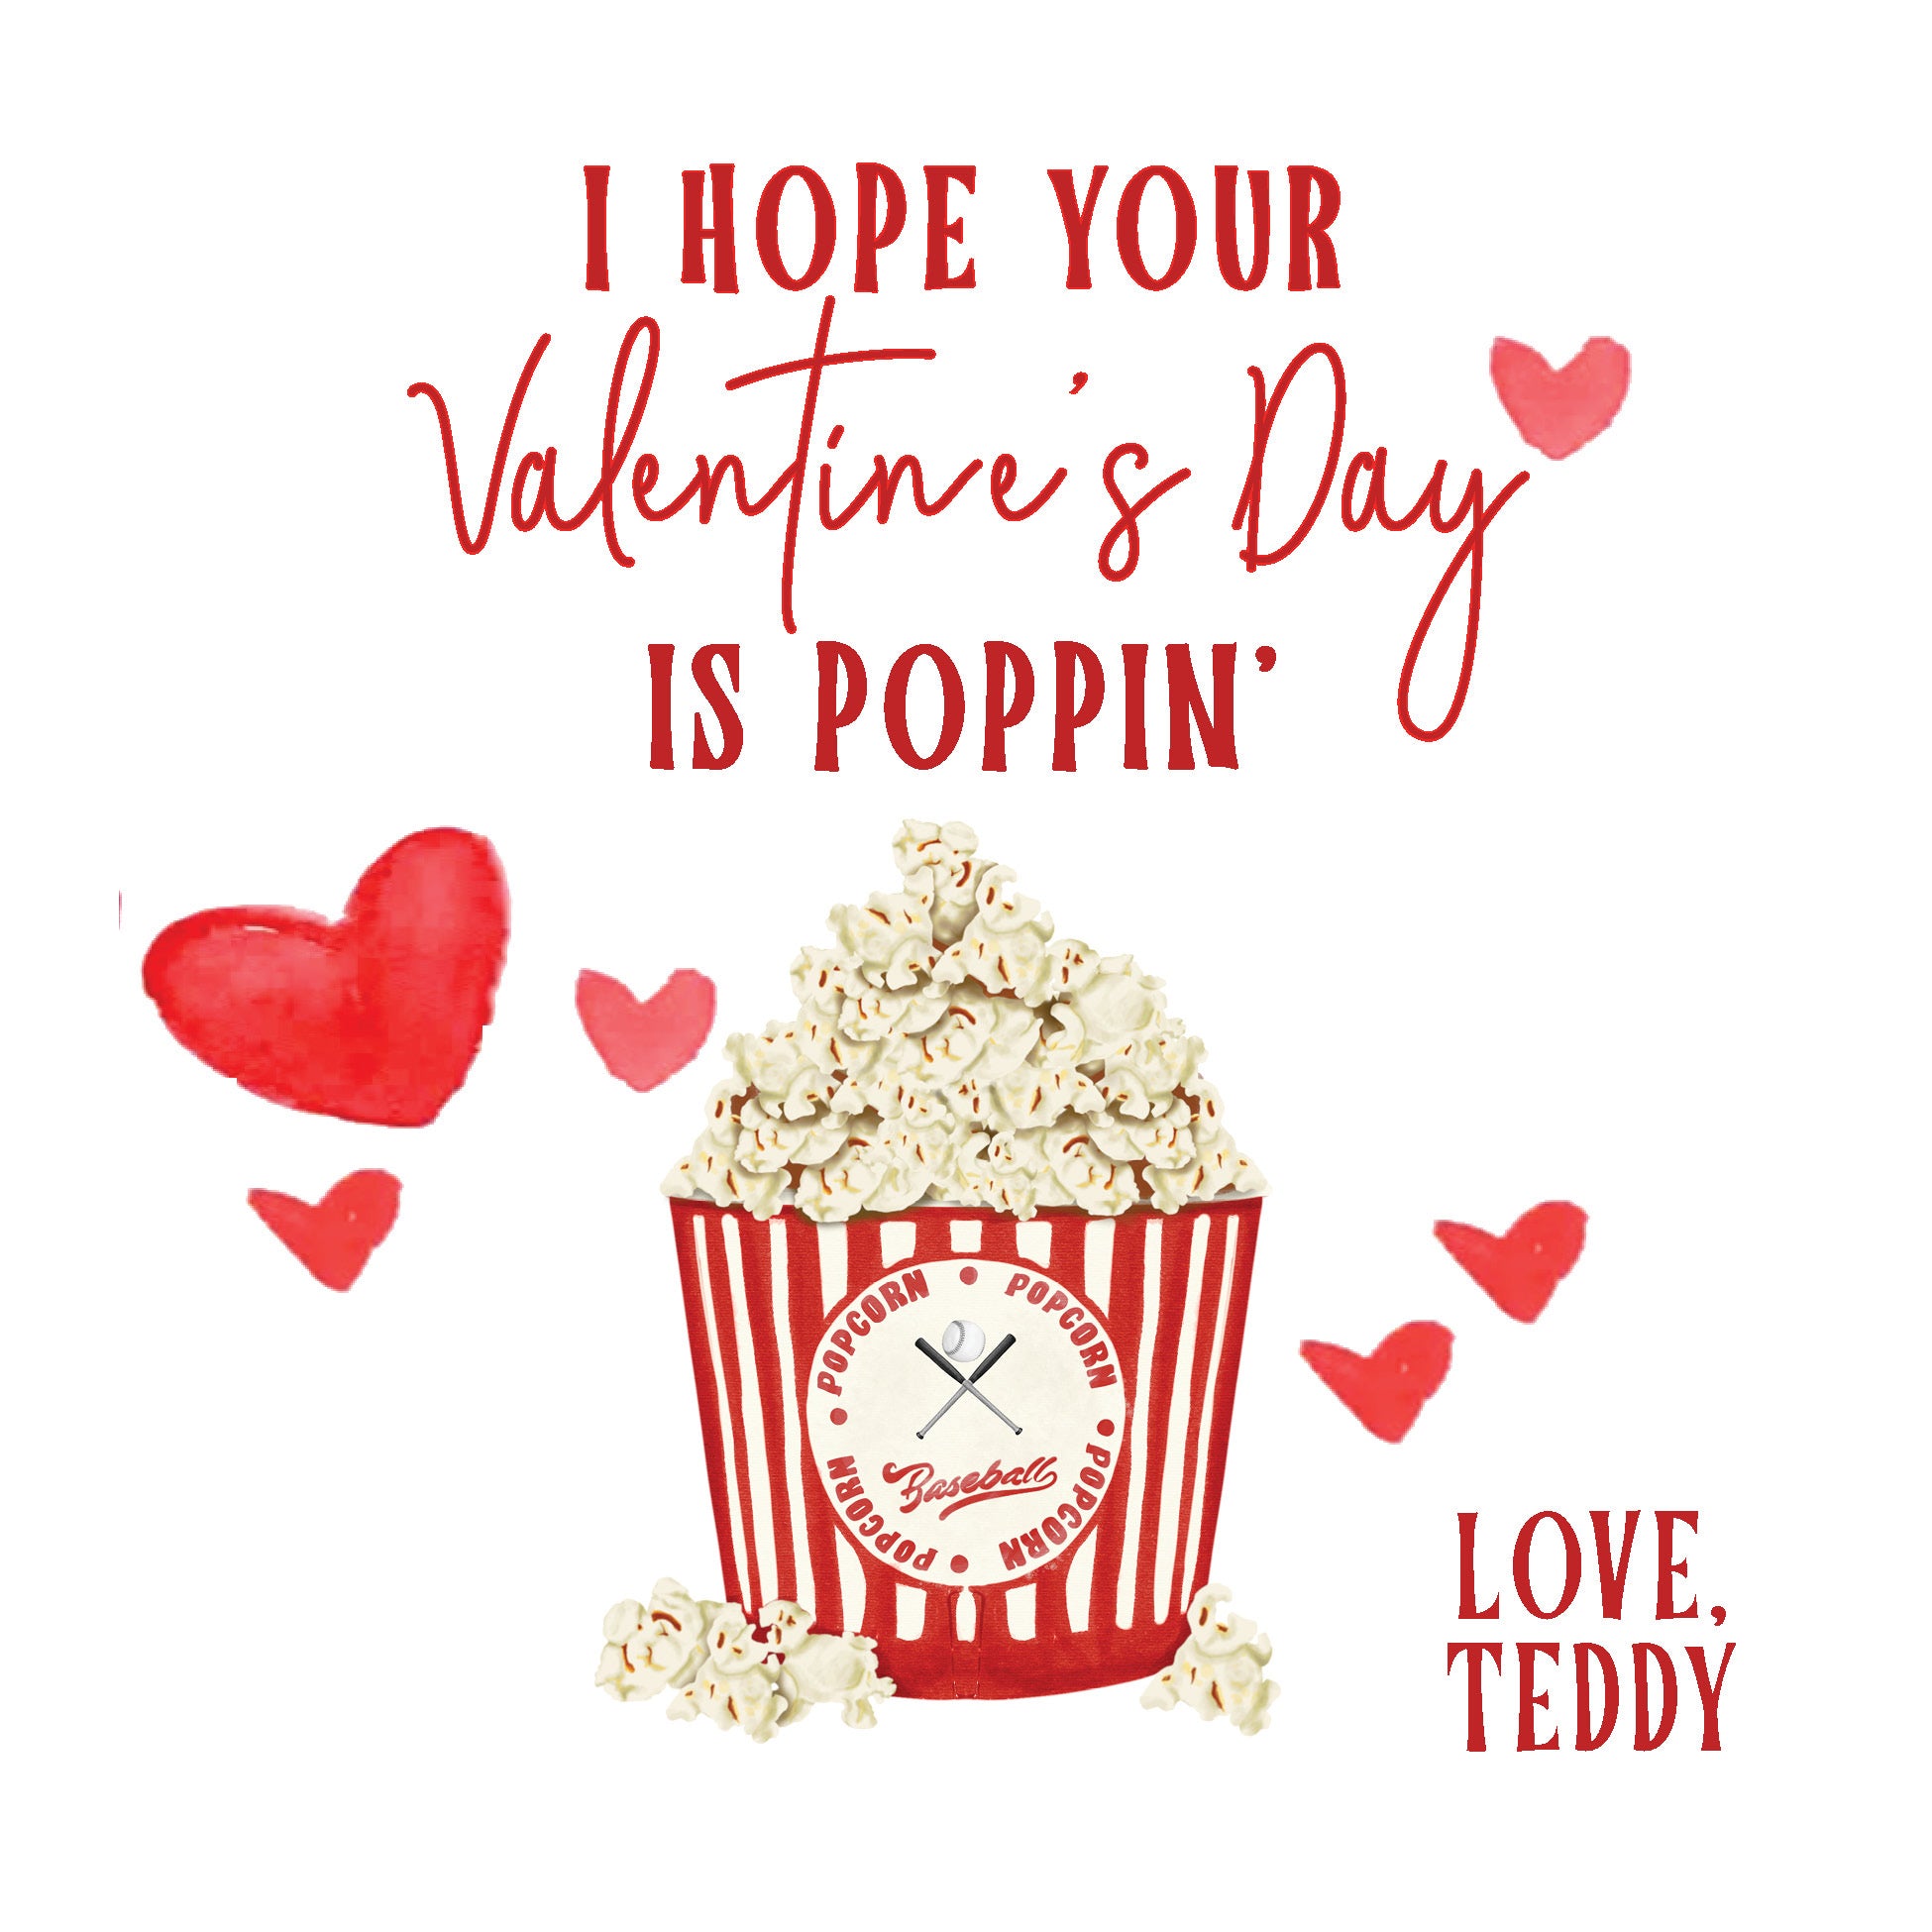 Poppin’ valentines